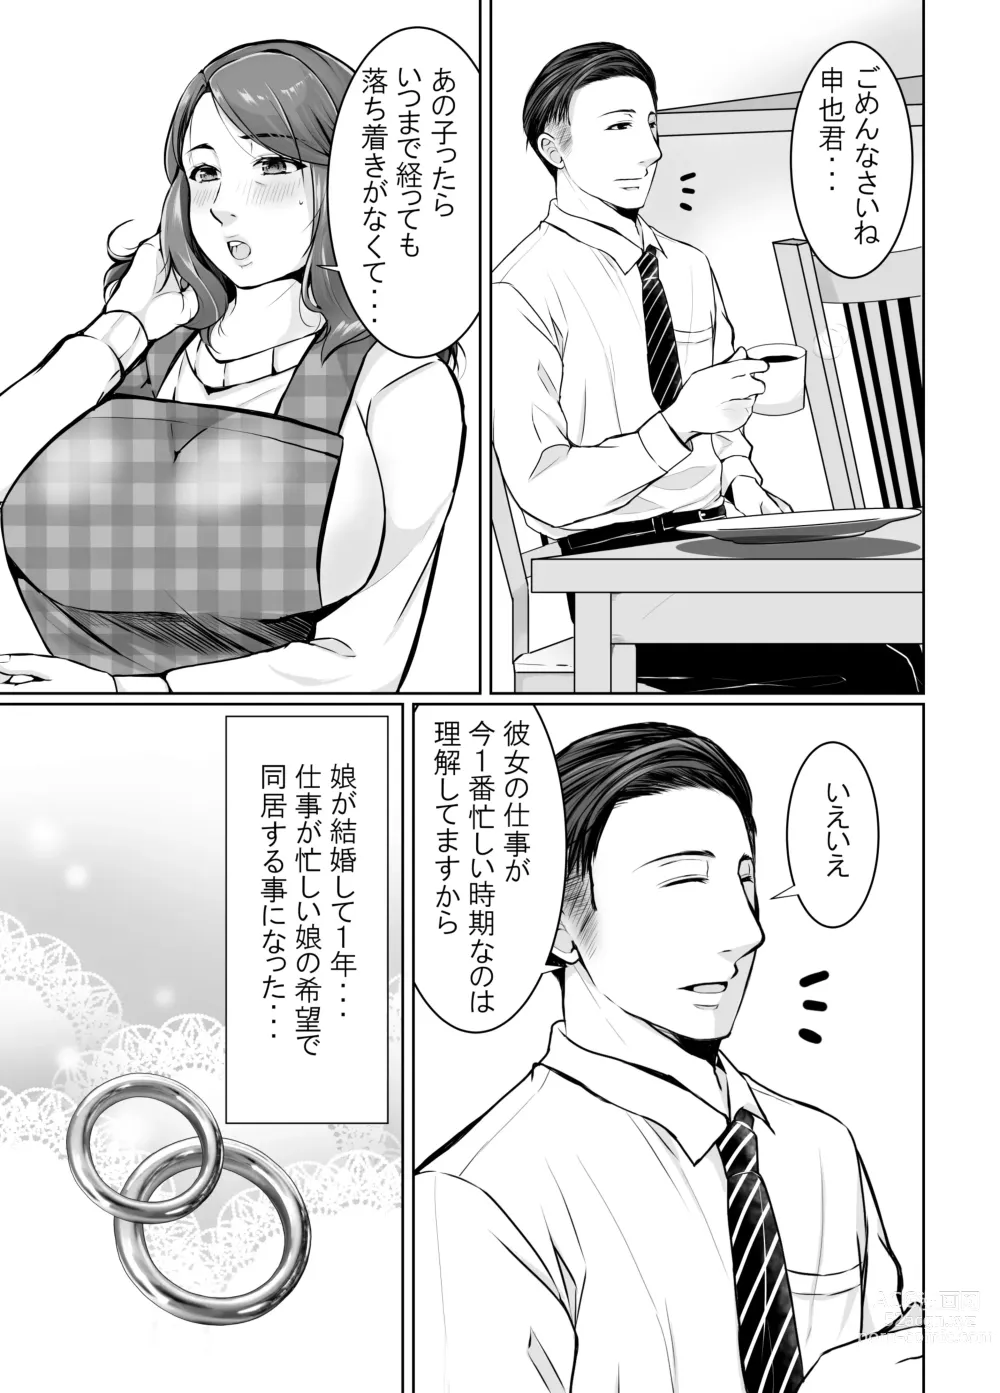 Page 4 of doujinshi Musumemuko ni Ochita Haha